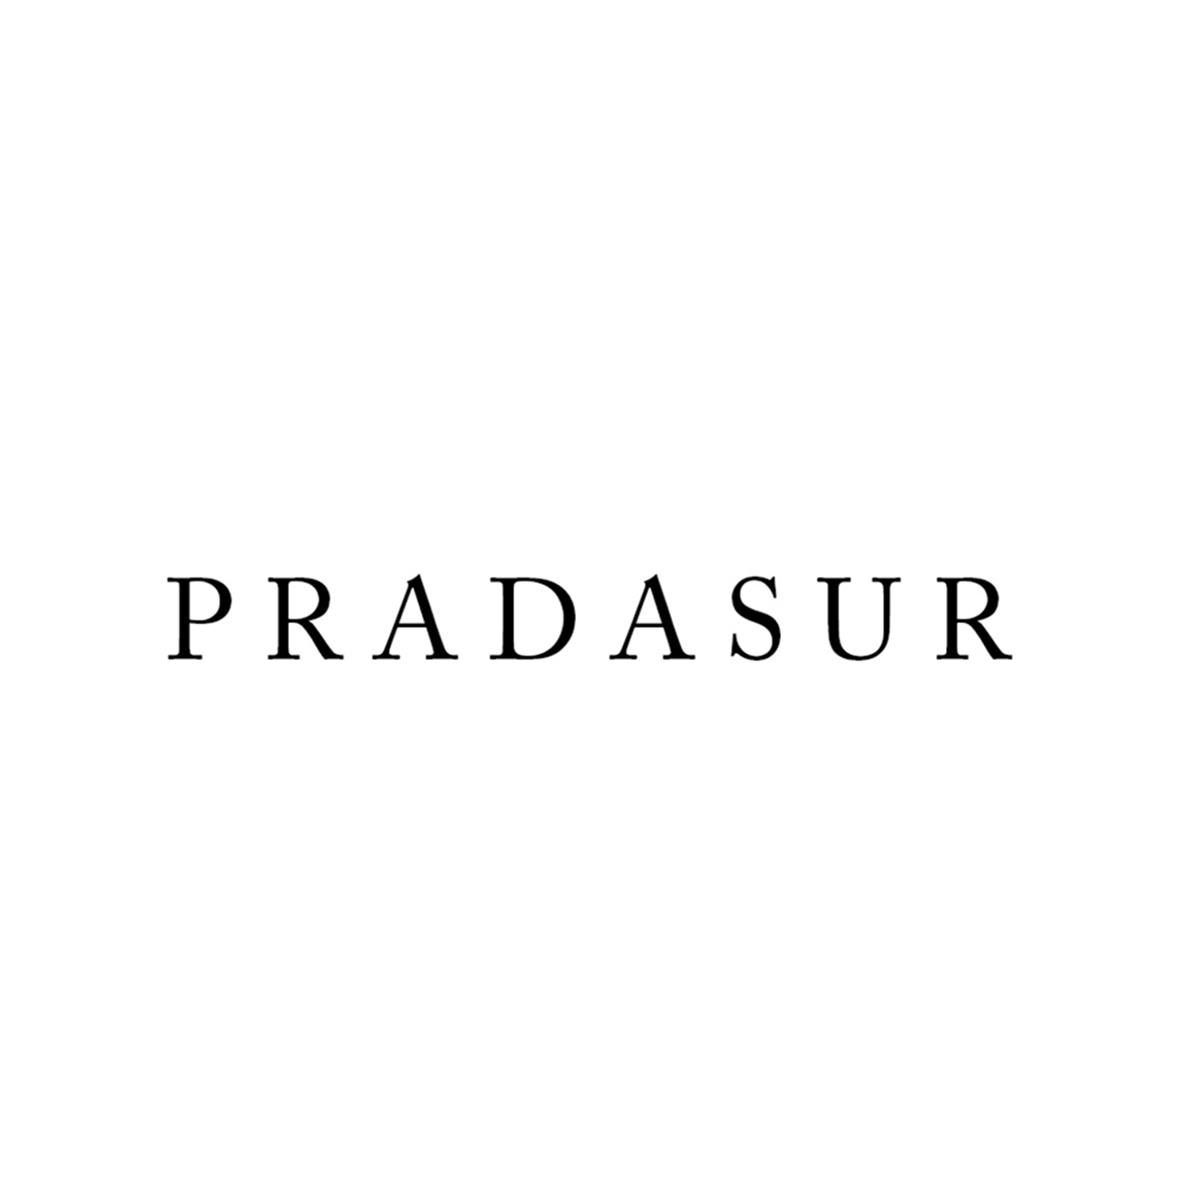 Pradasur Fotografía Logo